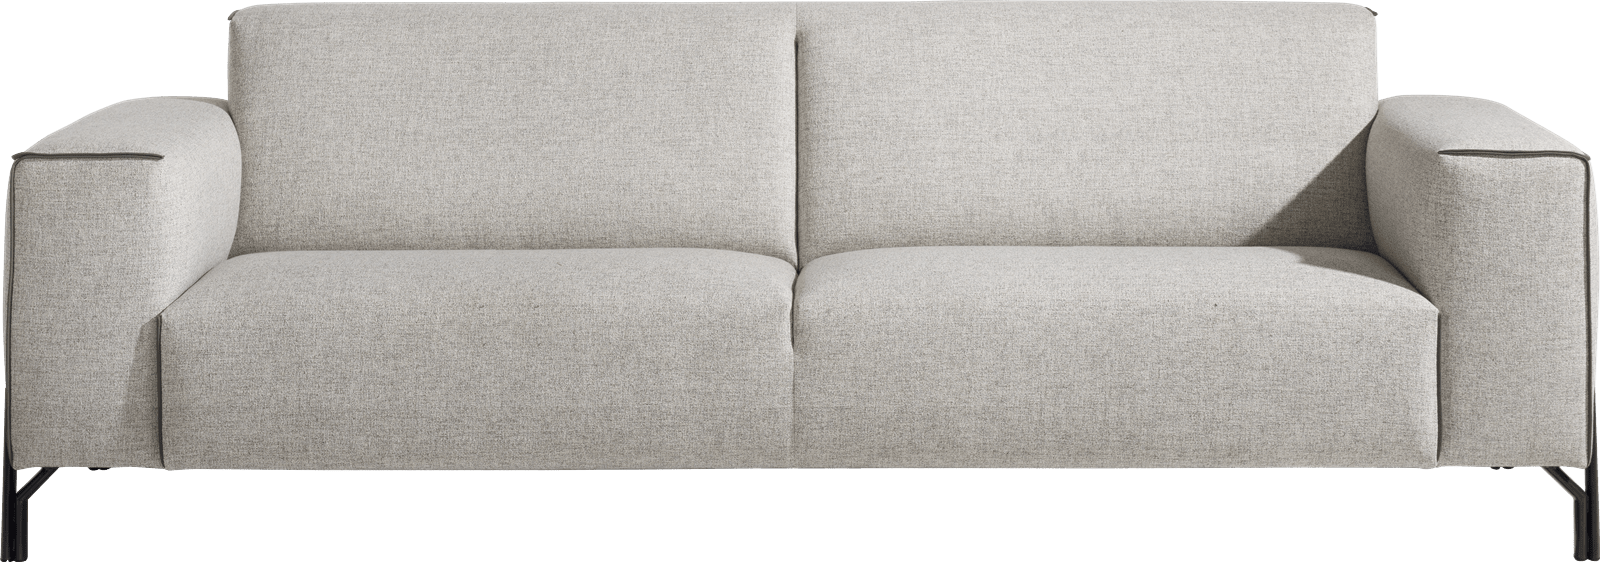 XOOON - Prizzi - Minimalistisches Design - Sofas - 3.5-Sitzer